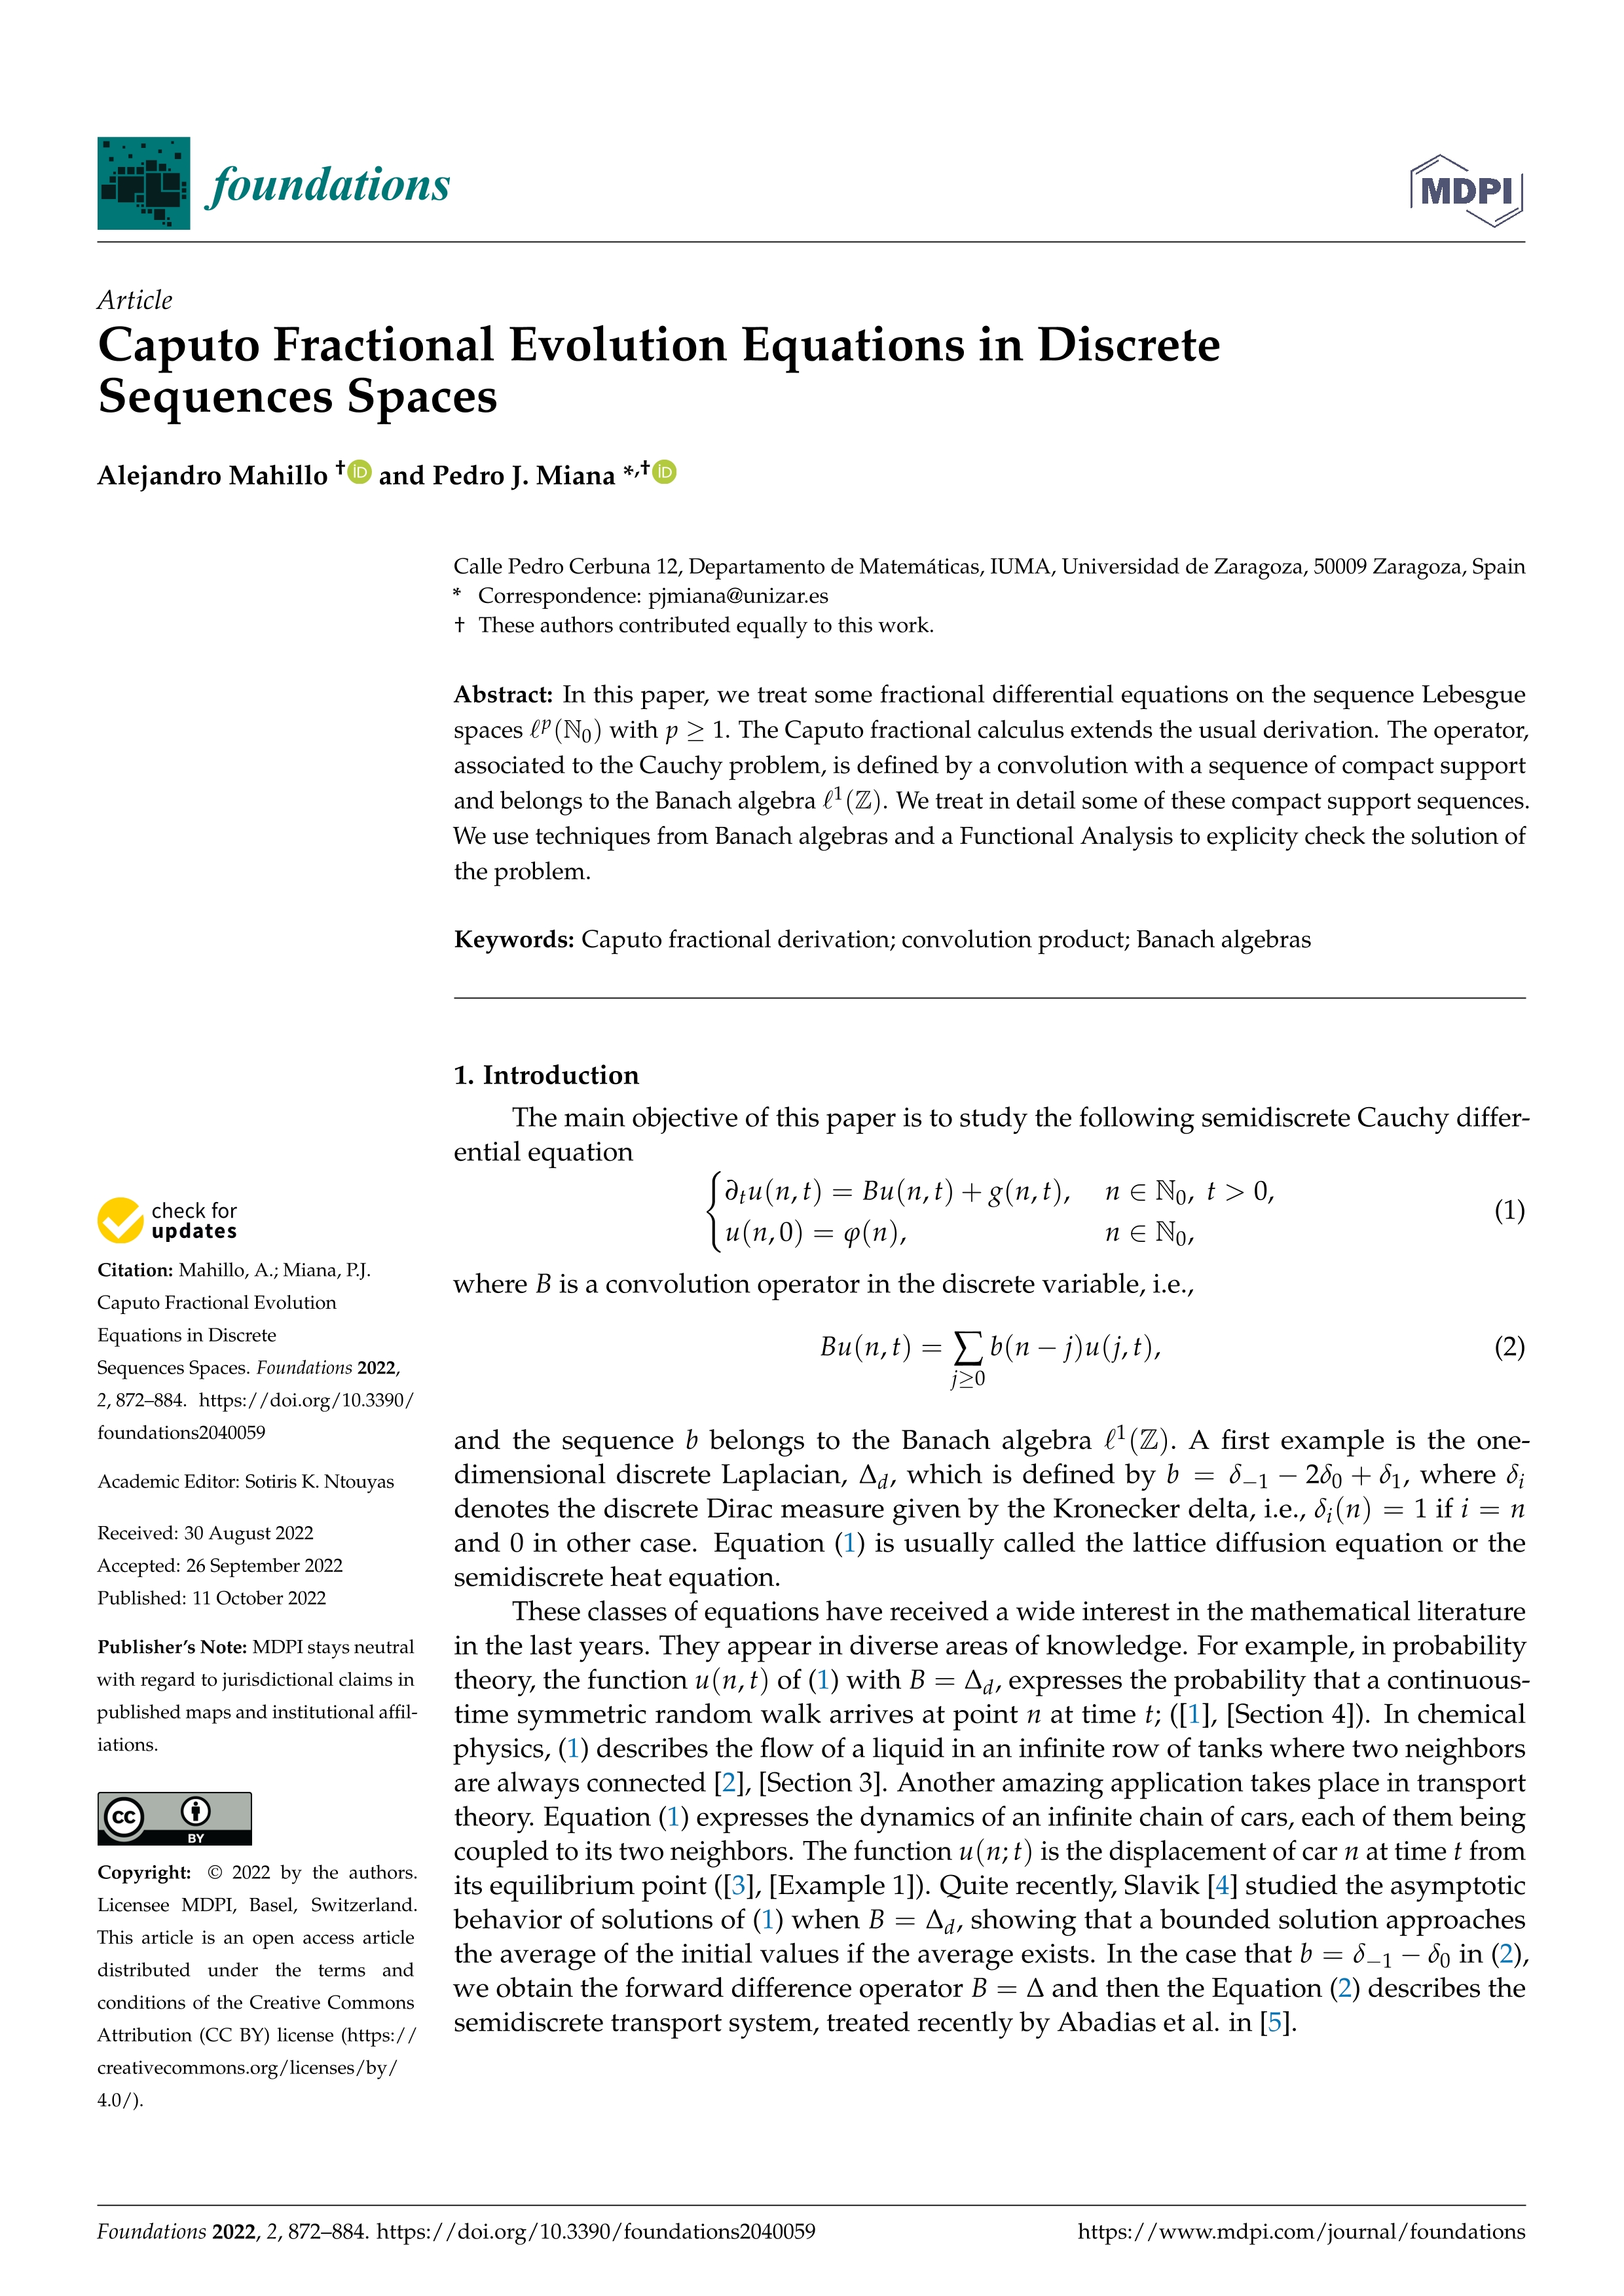 Caputo fractional evolution equations in discrete sequences spaces